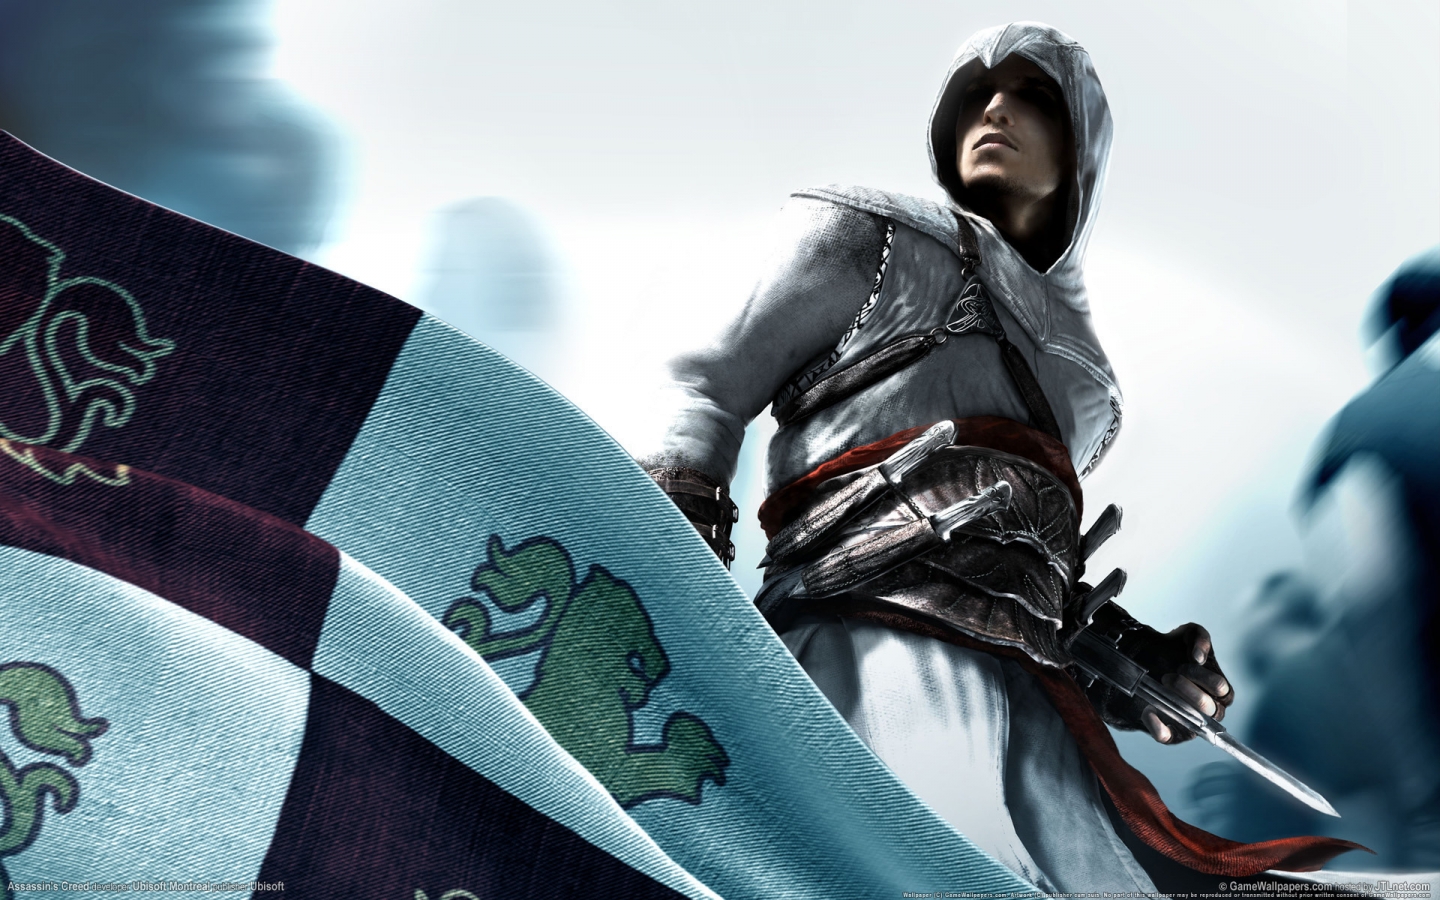 Beautiful Assassins Creed for 1440 x 900 widescreen resolution